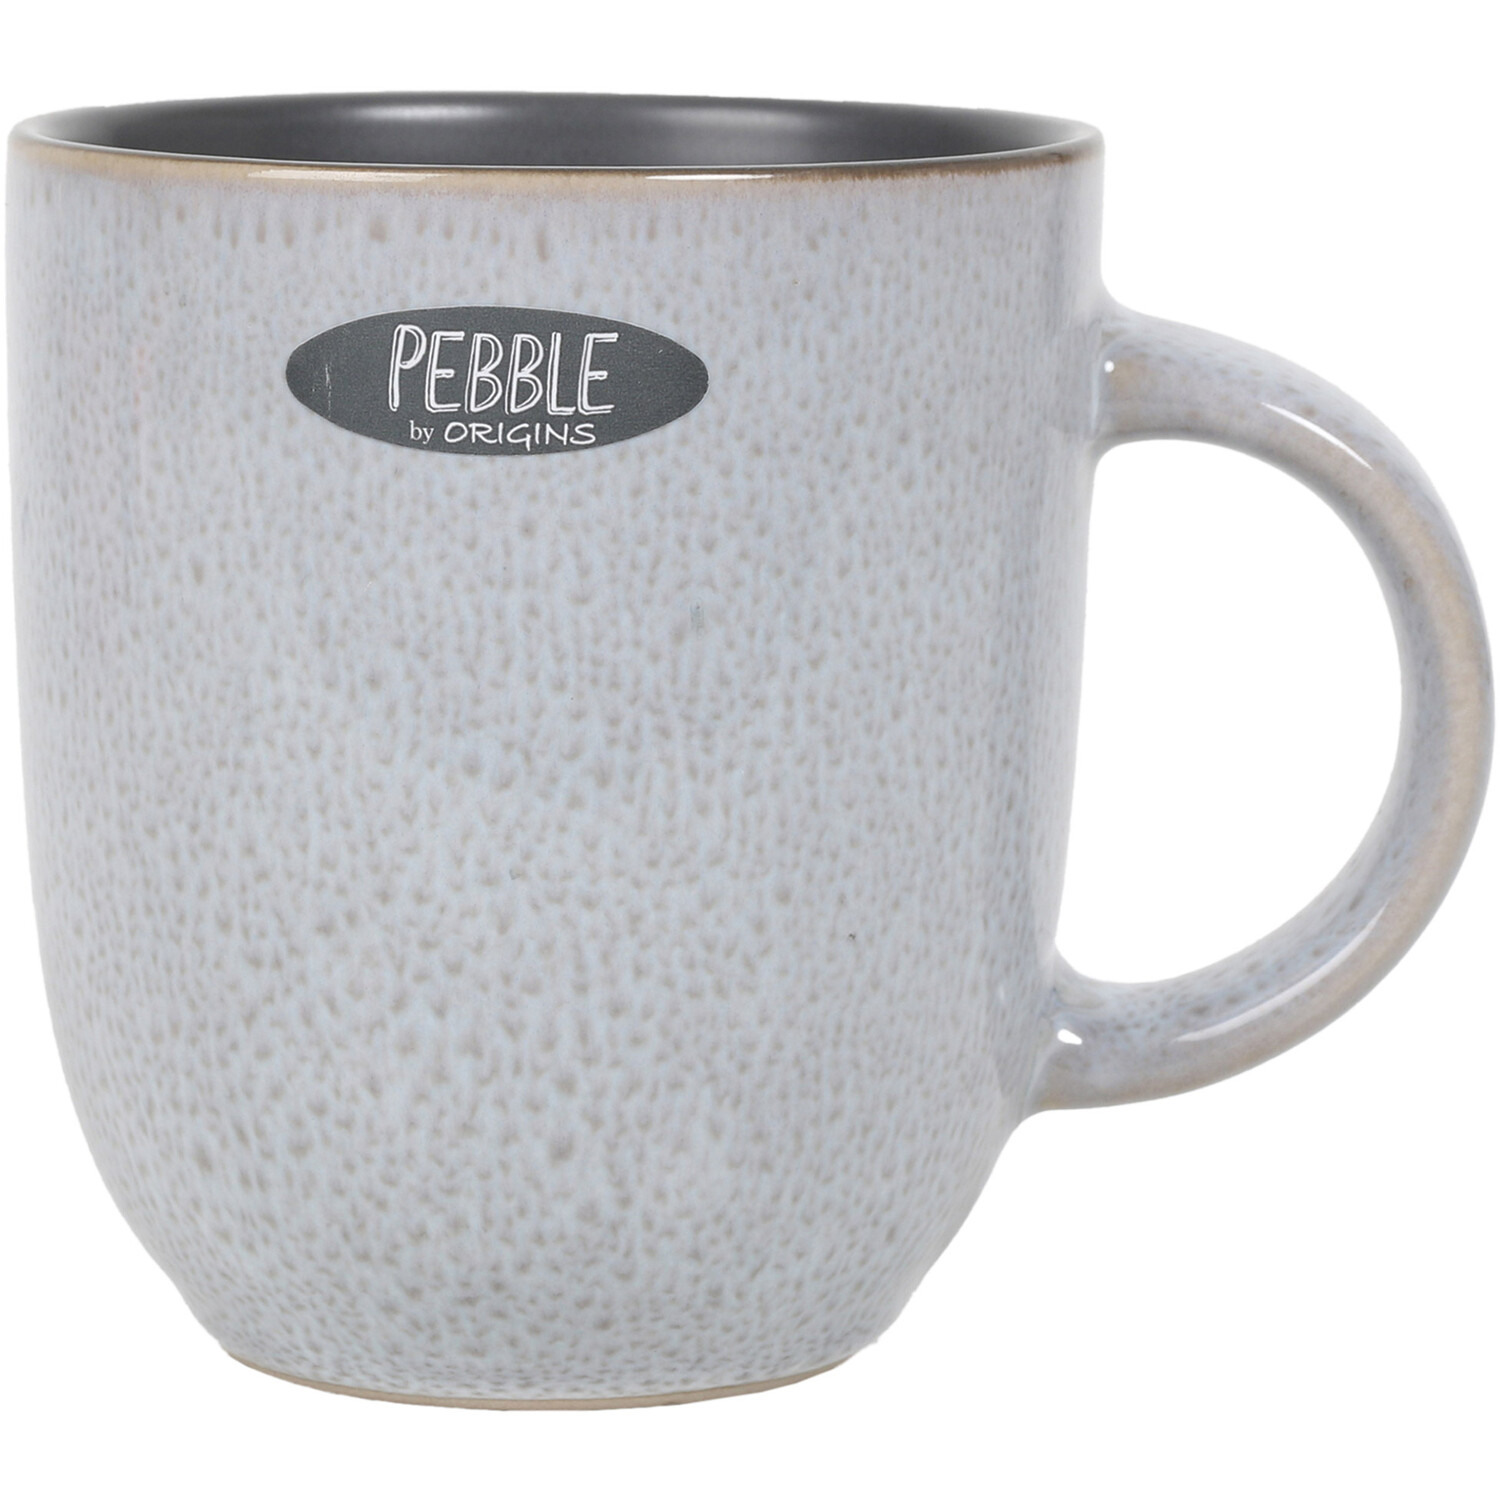 Pebble Reactive Glaze Bullet Mug - Grey Image 1